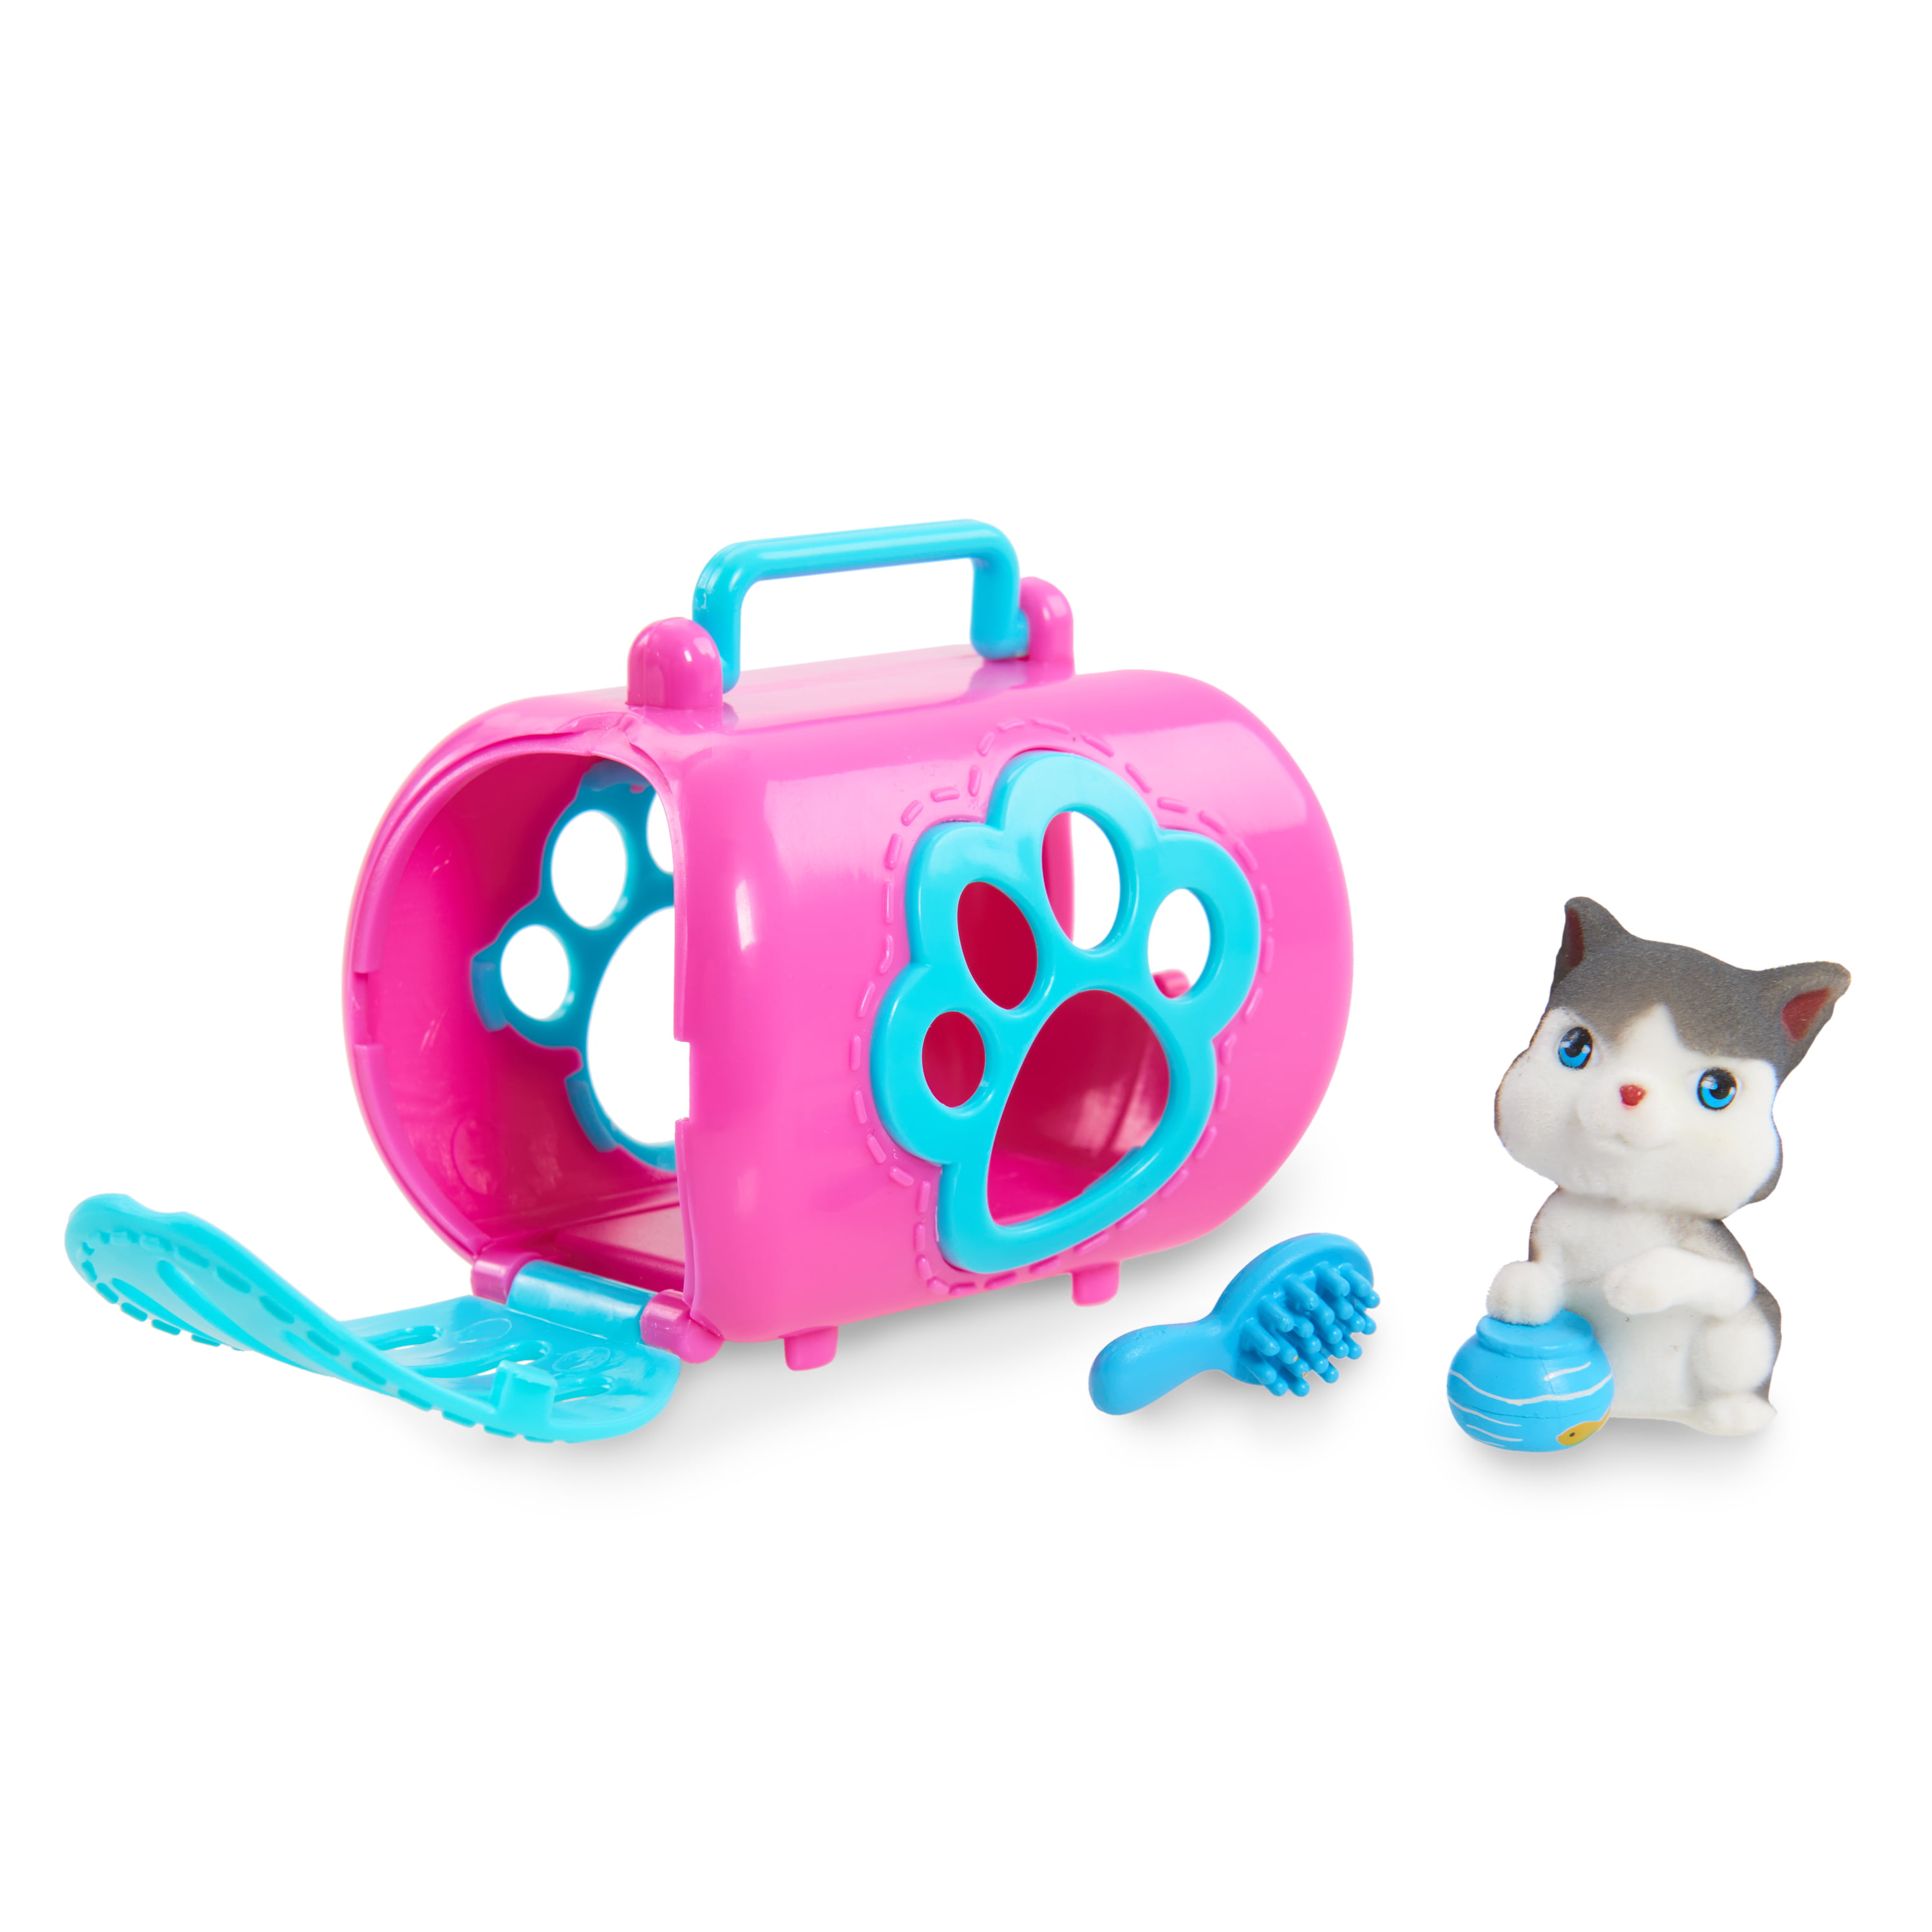 kitten carrier toy